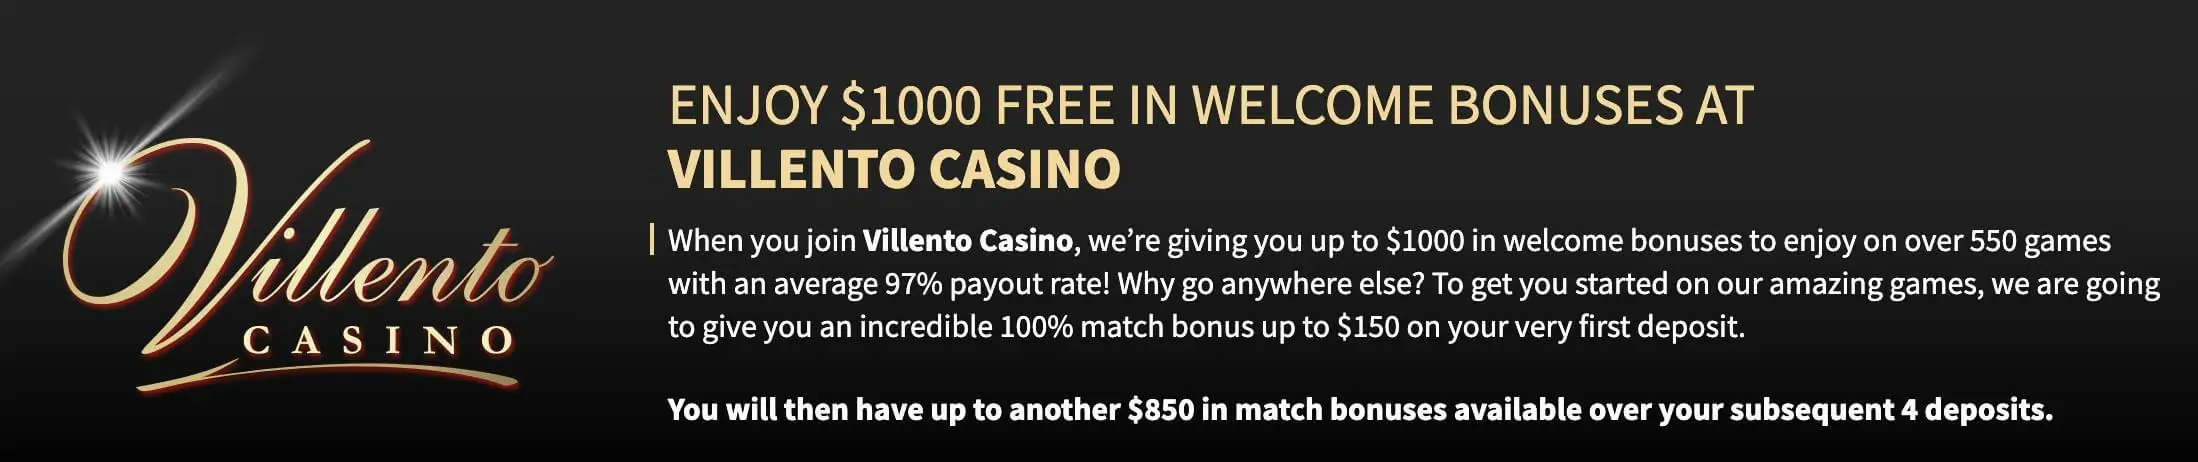 Villento Welcome bonus